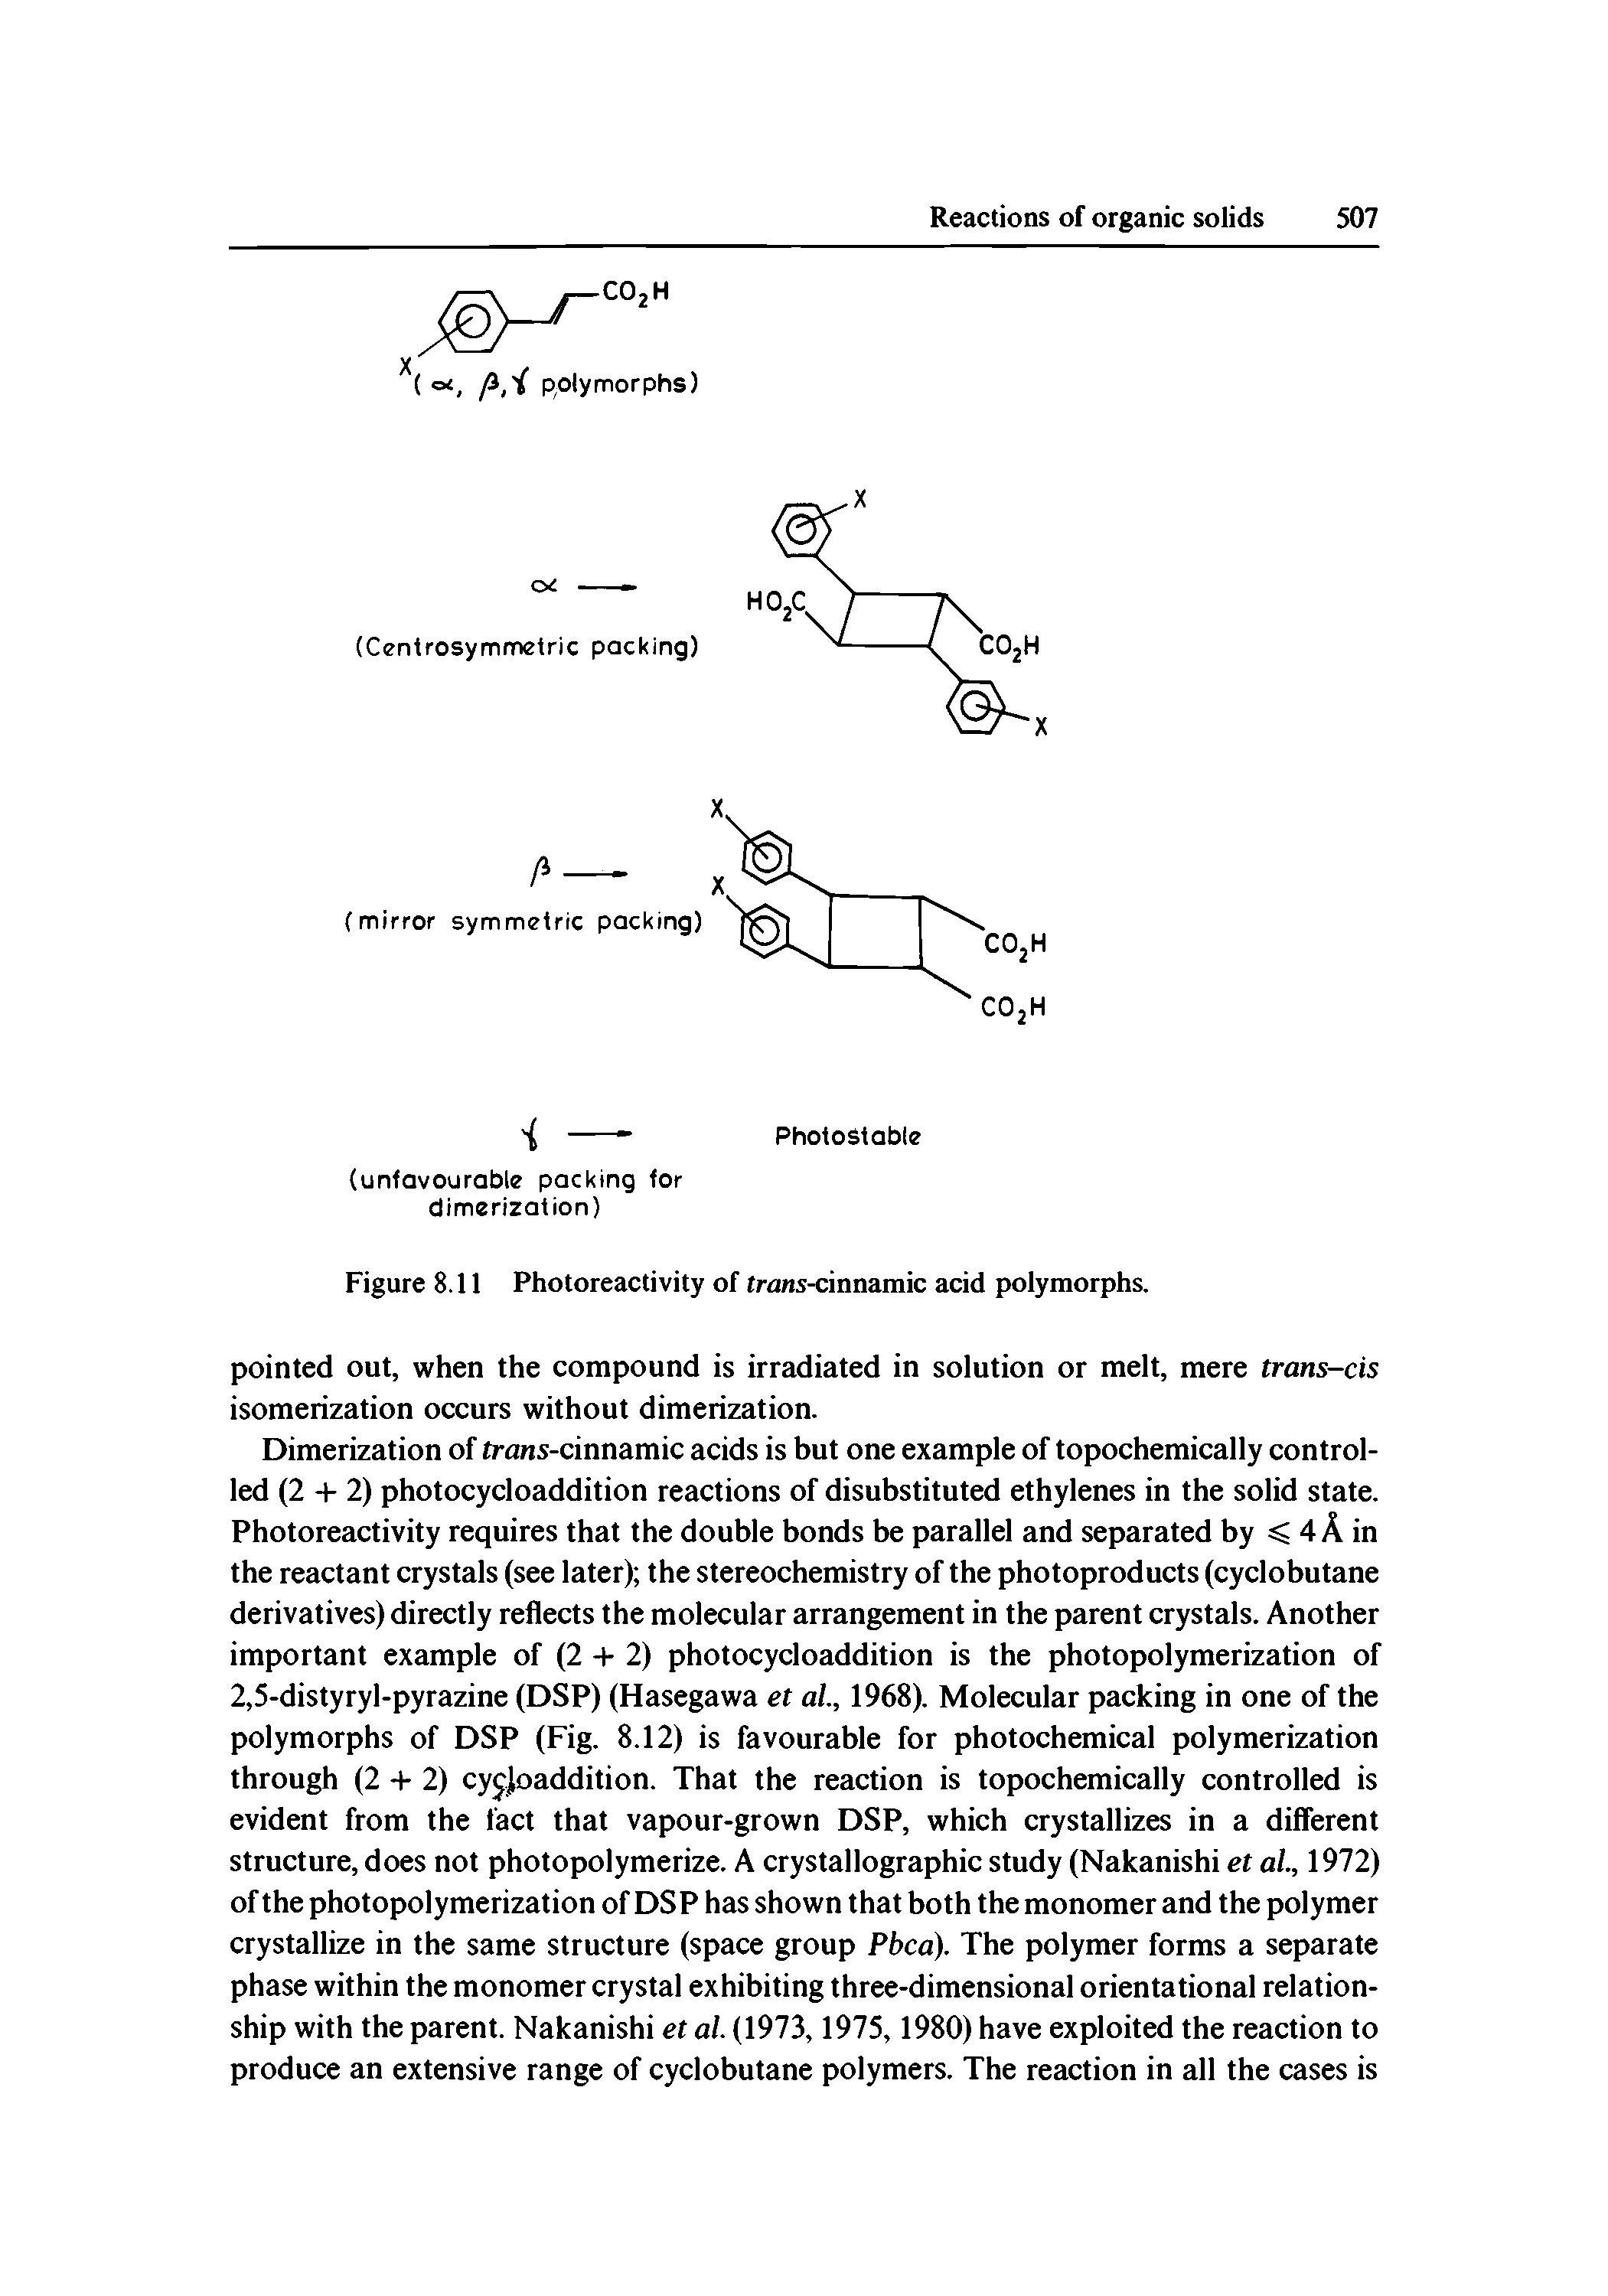 Figure 8.11 Photoreactivity of rrans-cinnamic acid polymorphs.